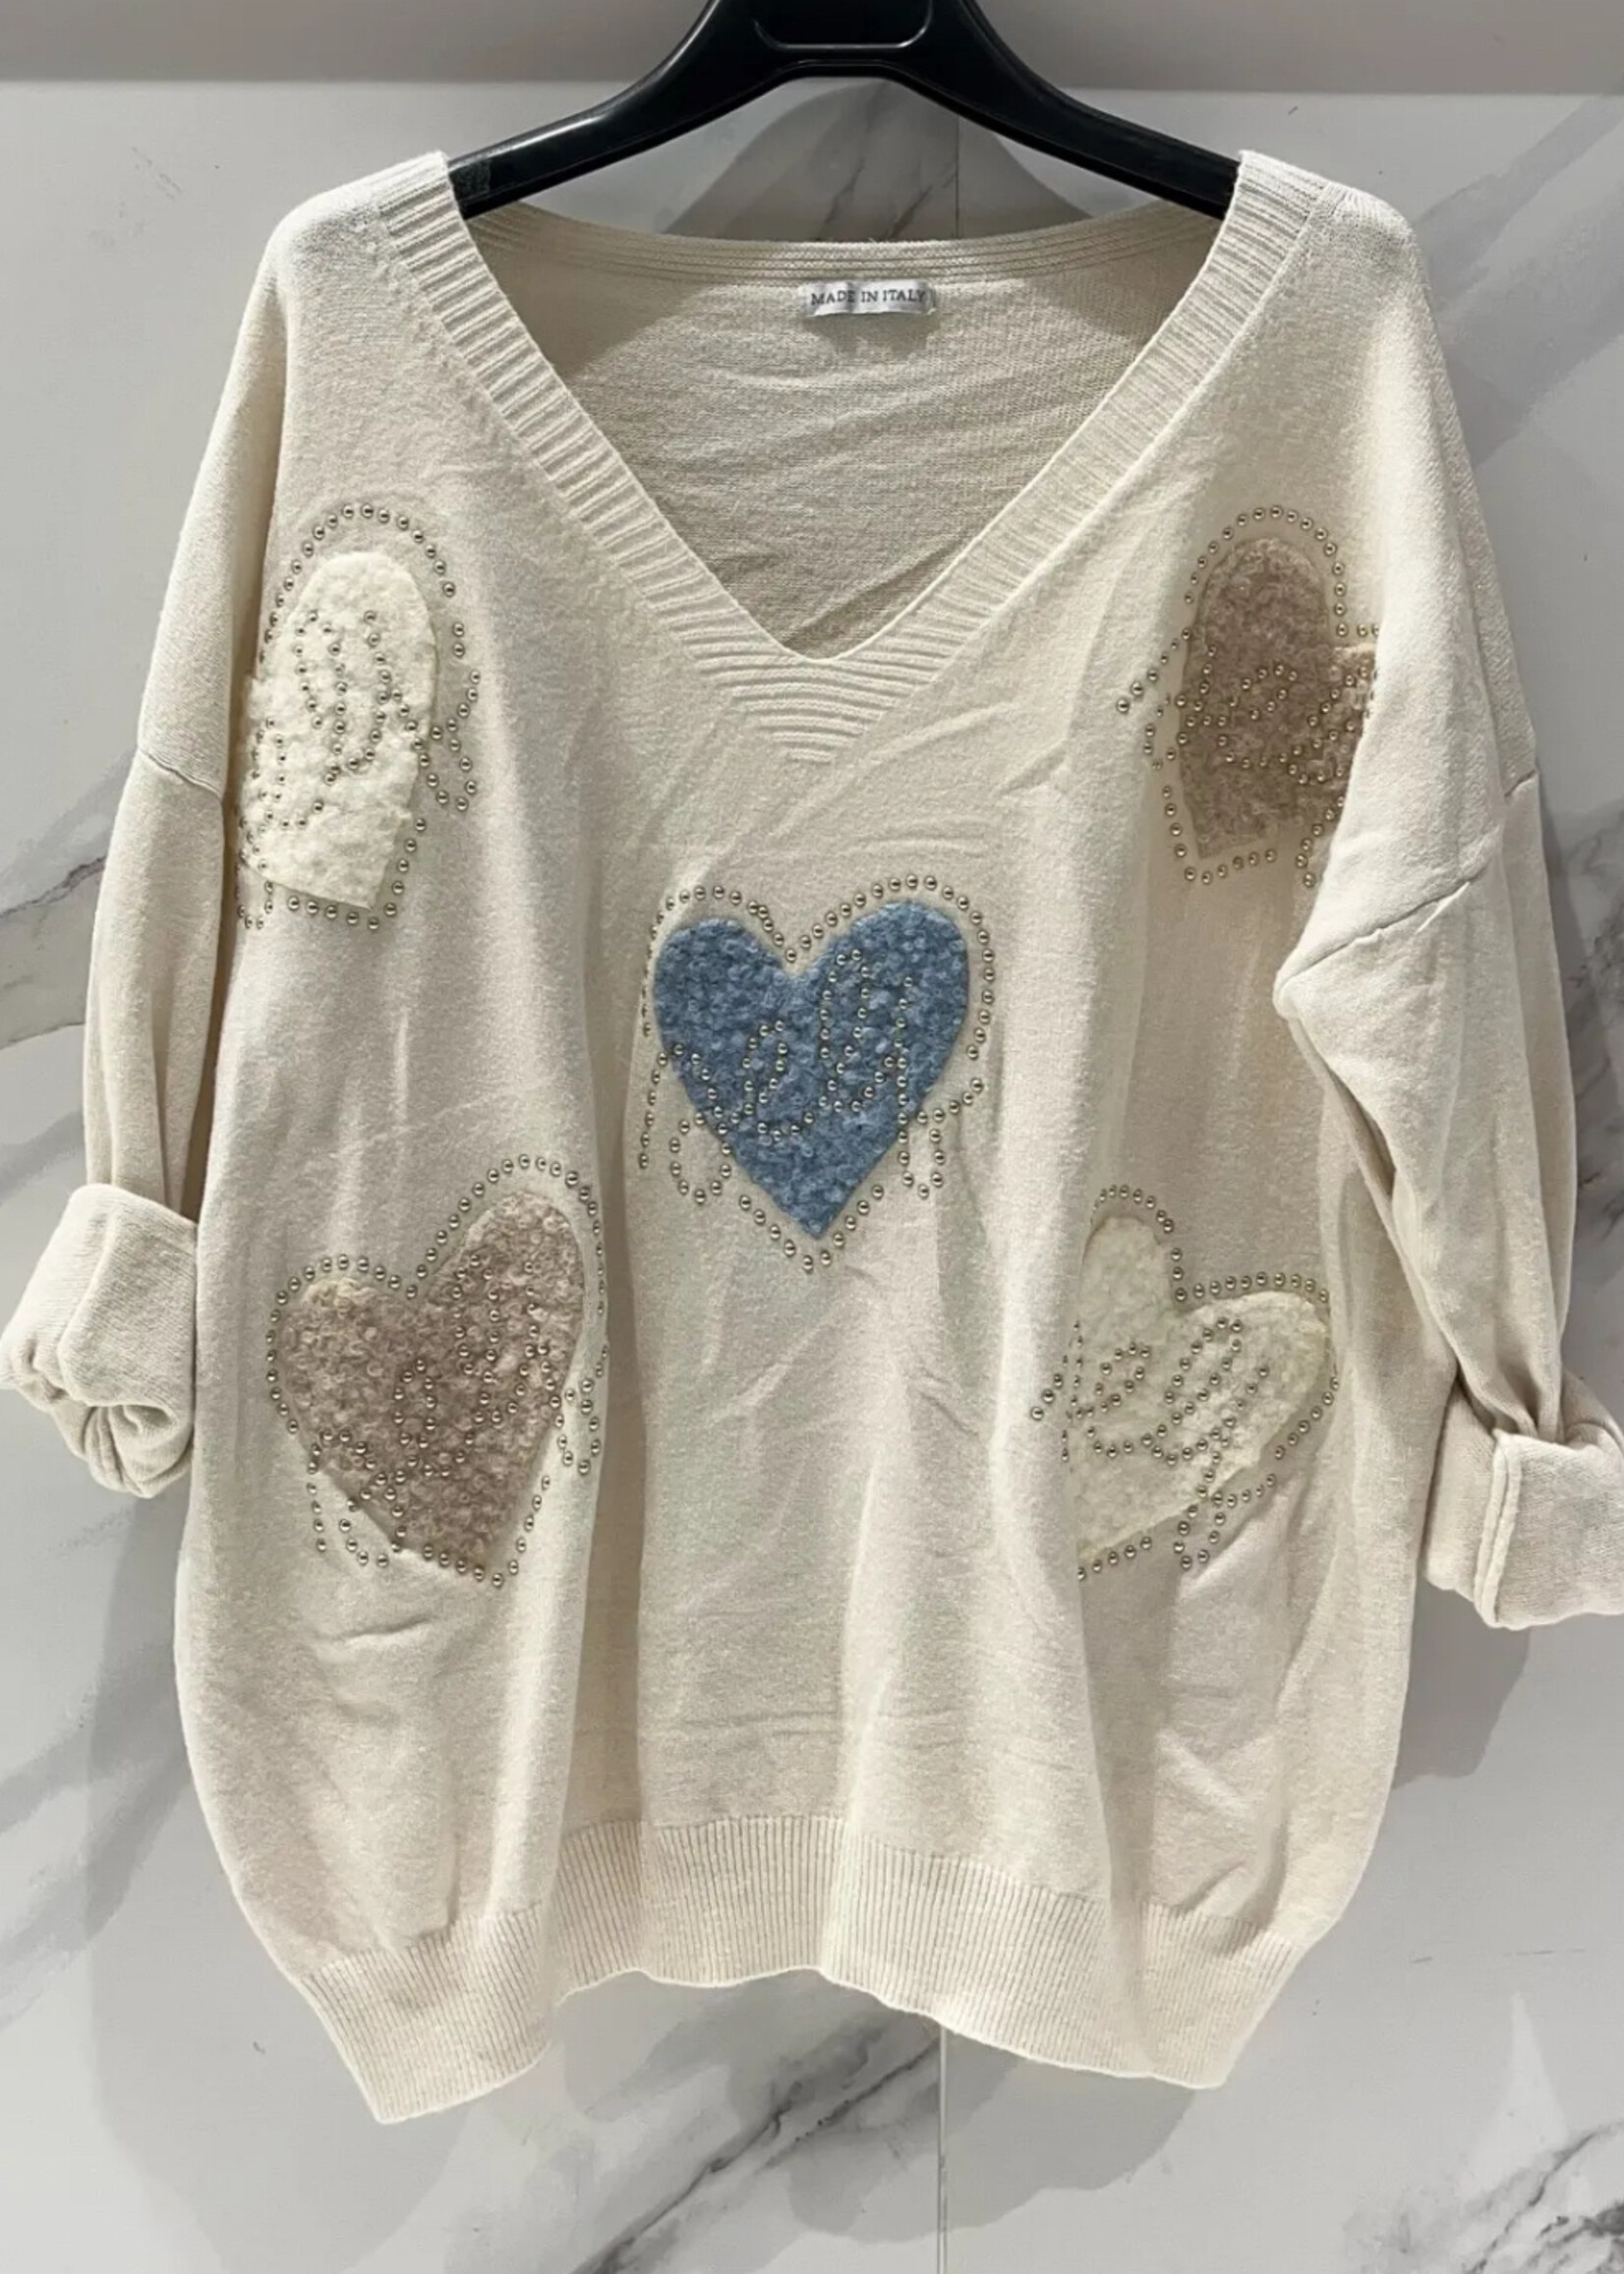 Puff heart sweater